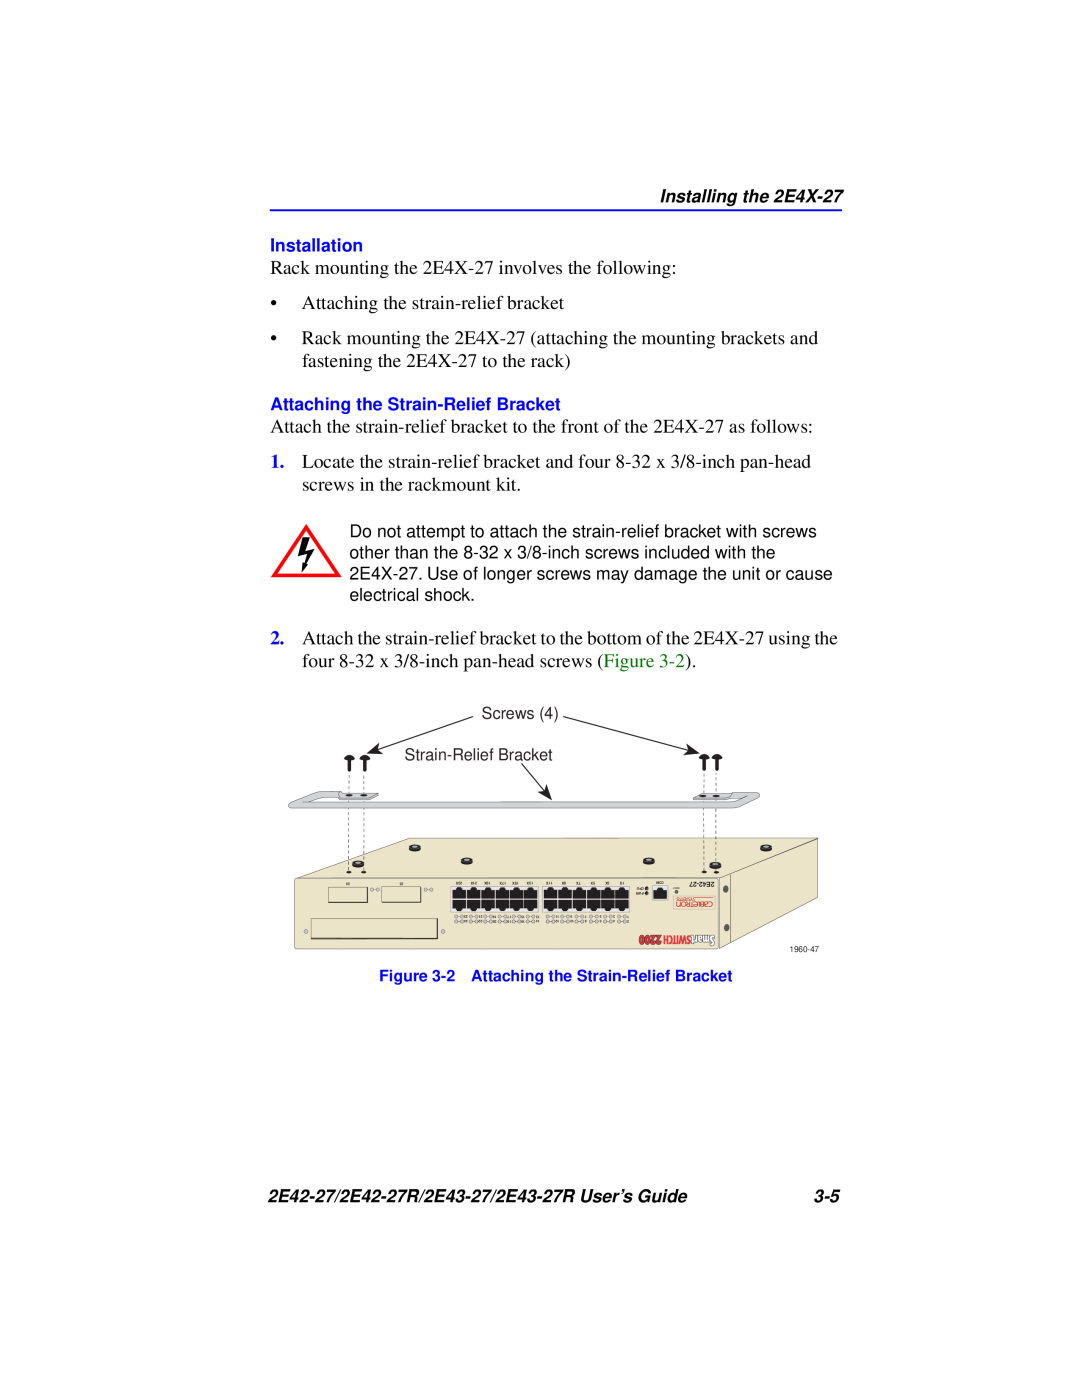 Cabletron Systems 2E42-27R, 2E43-27R manual Rack mounting the 2E4X-27 involves the following 